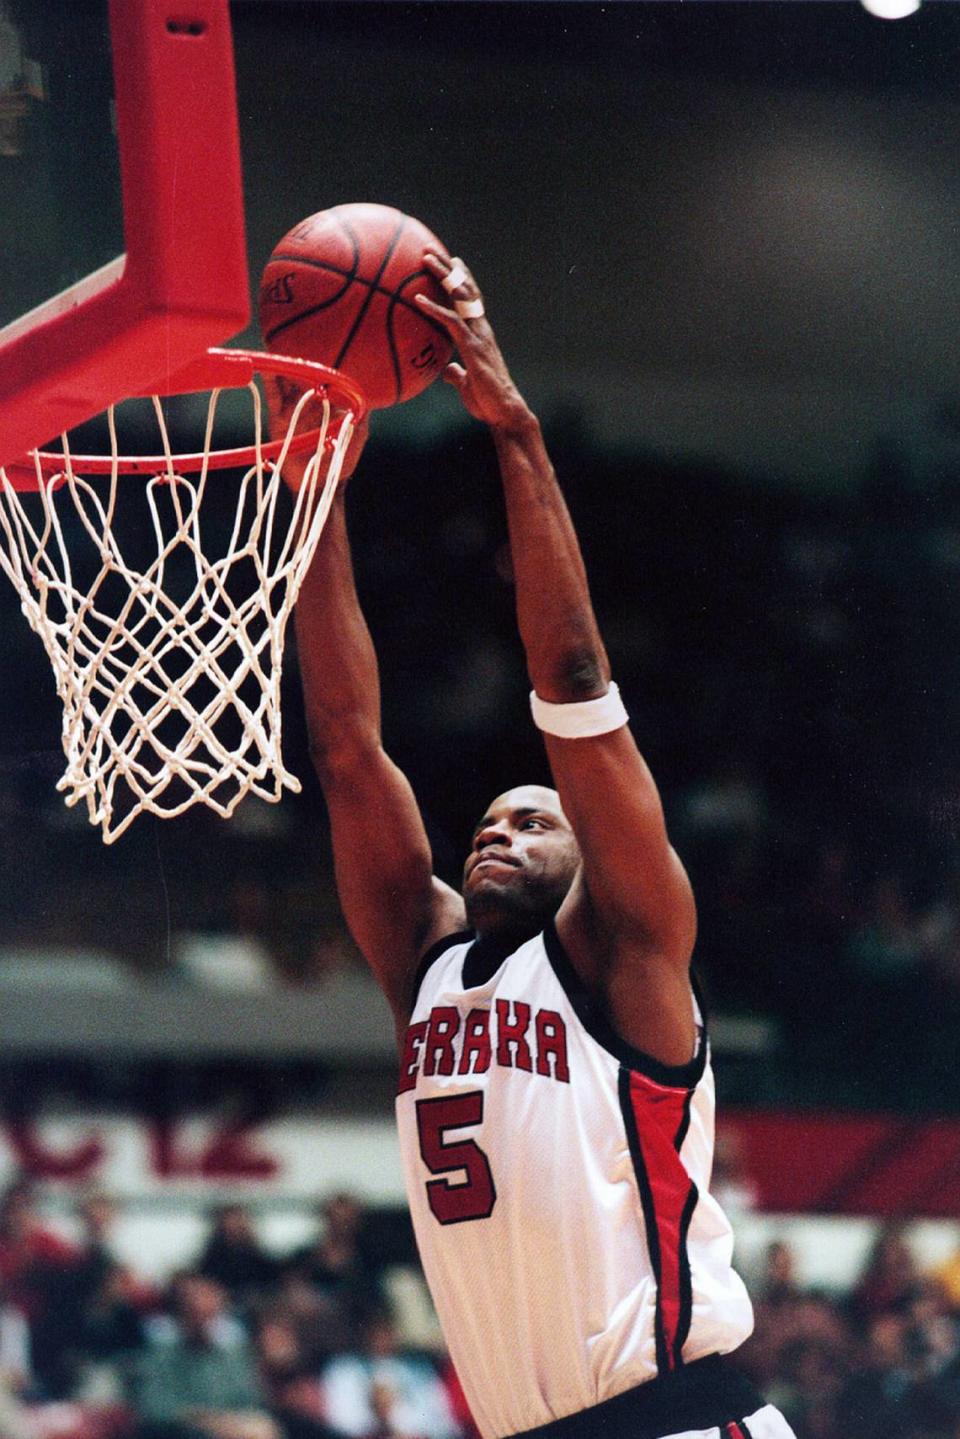 Phenix City native Larry Florence played college basketball at the University of Nebraska.